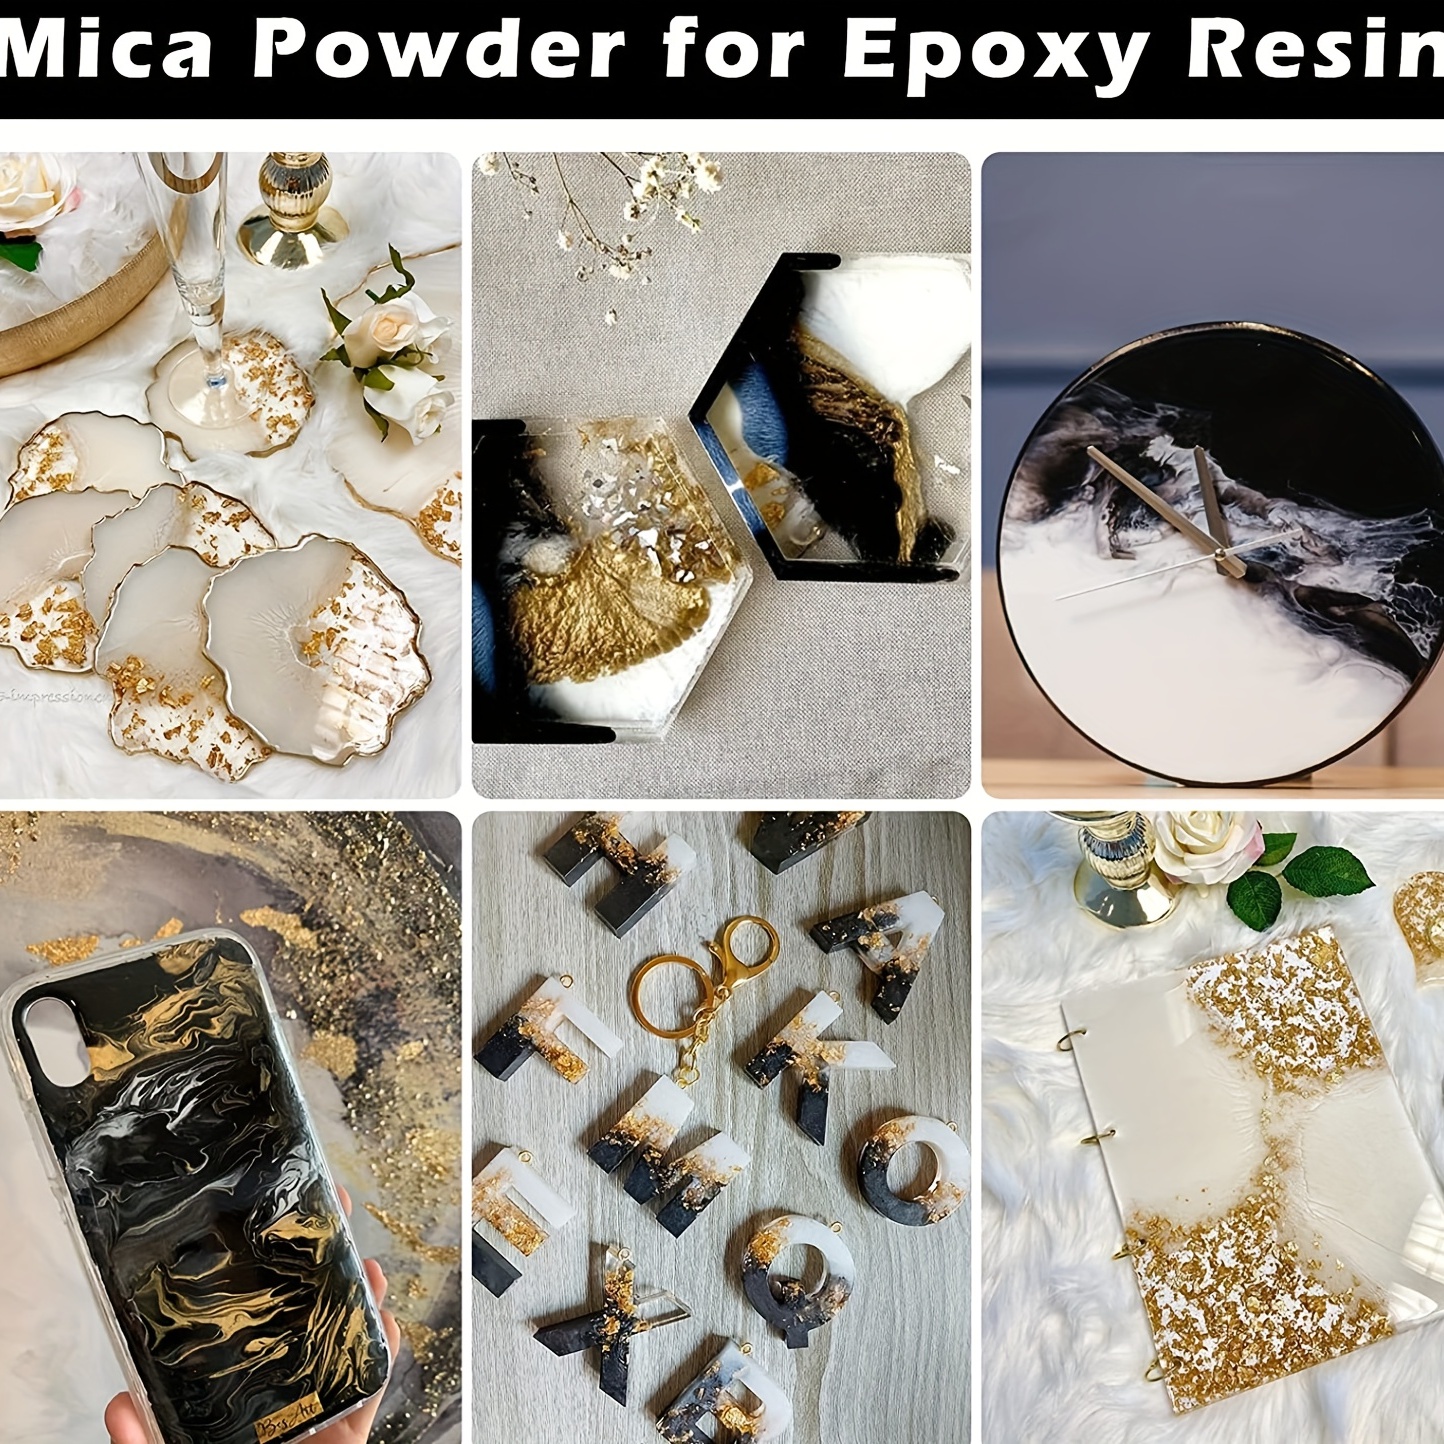  HTVRONT Gold Mica Powder for Epoxy Resin - 1.76 oz/50g Mica  Pigment Powder, Natural Mica Powder for Soap Making, Resin, Candle Making,  Bath Bomb, Non-Toxic Pigment Powder